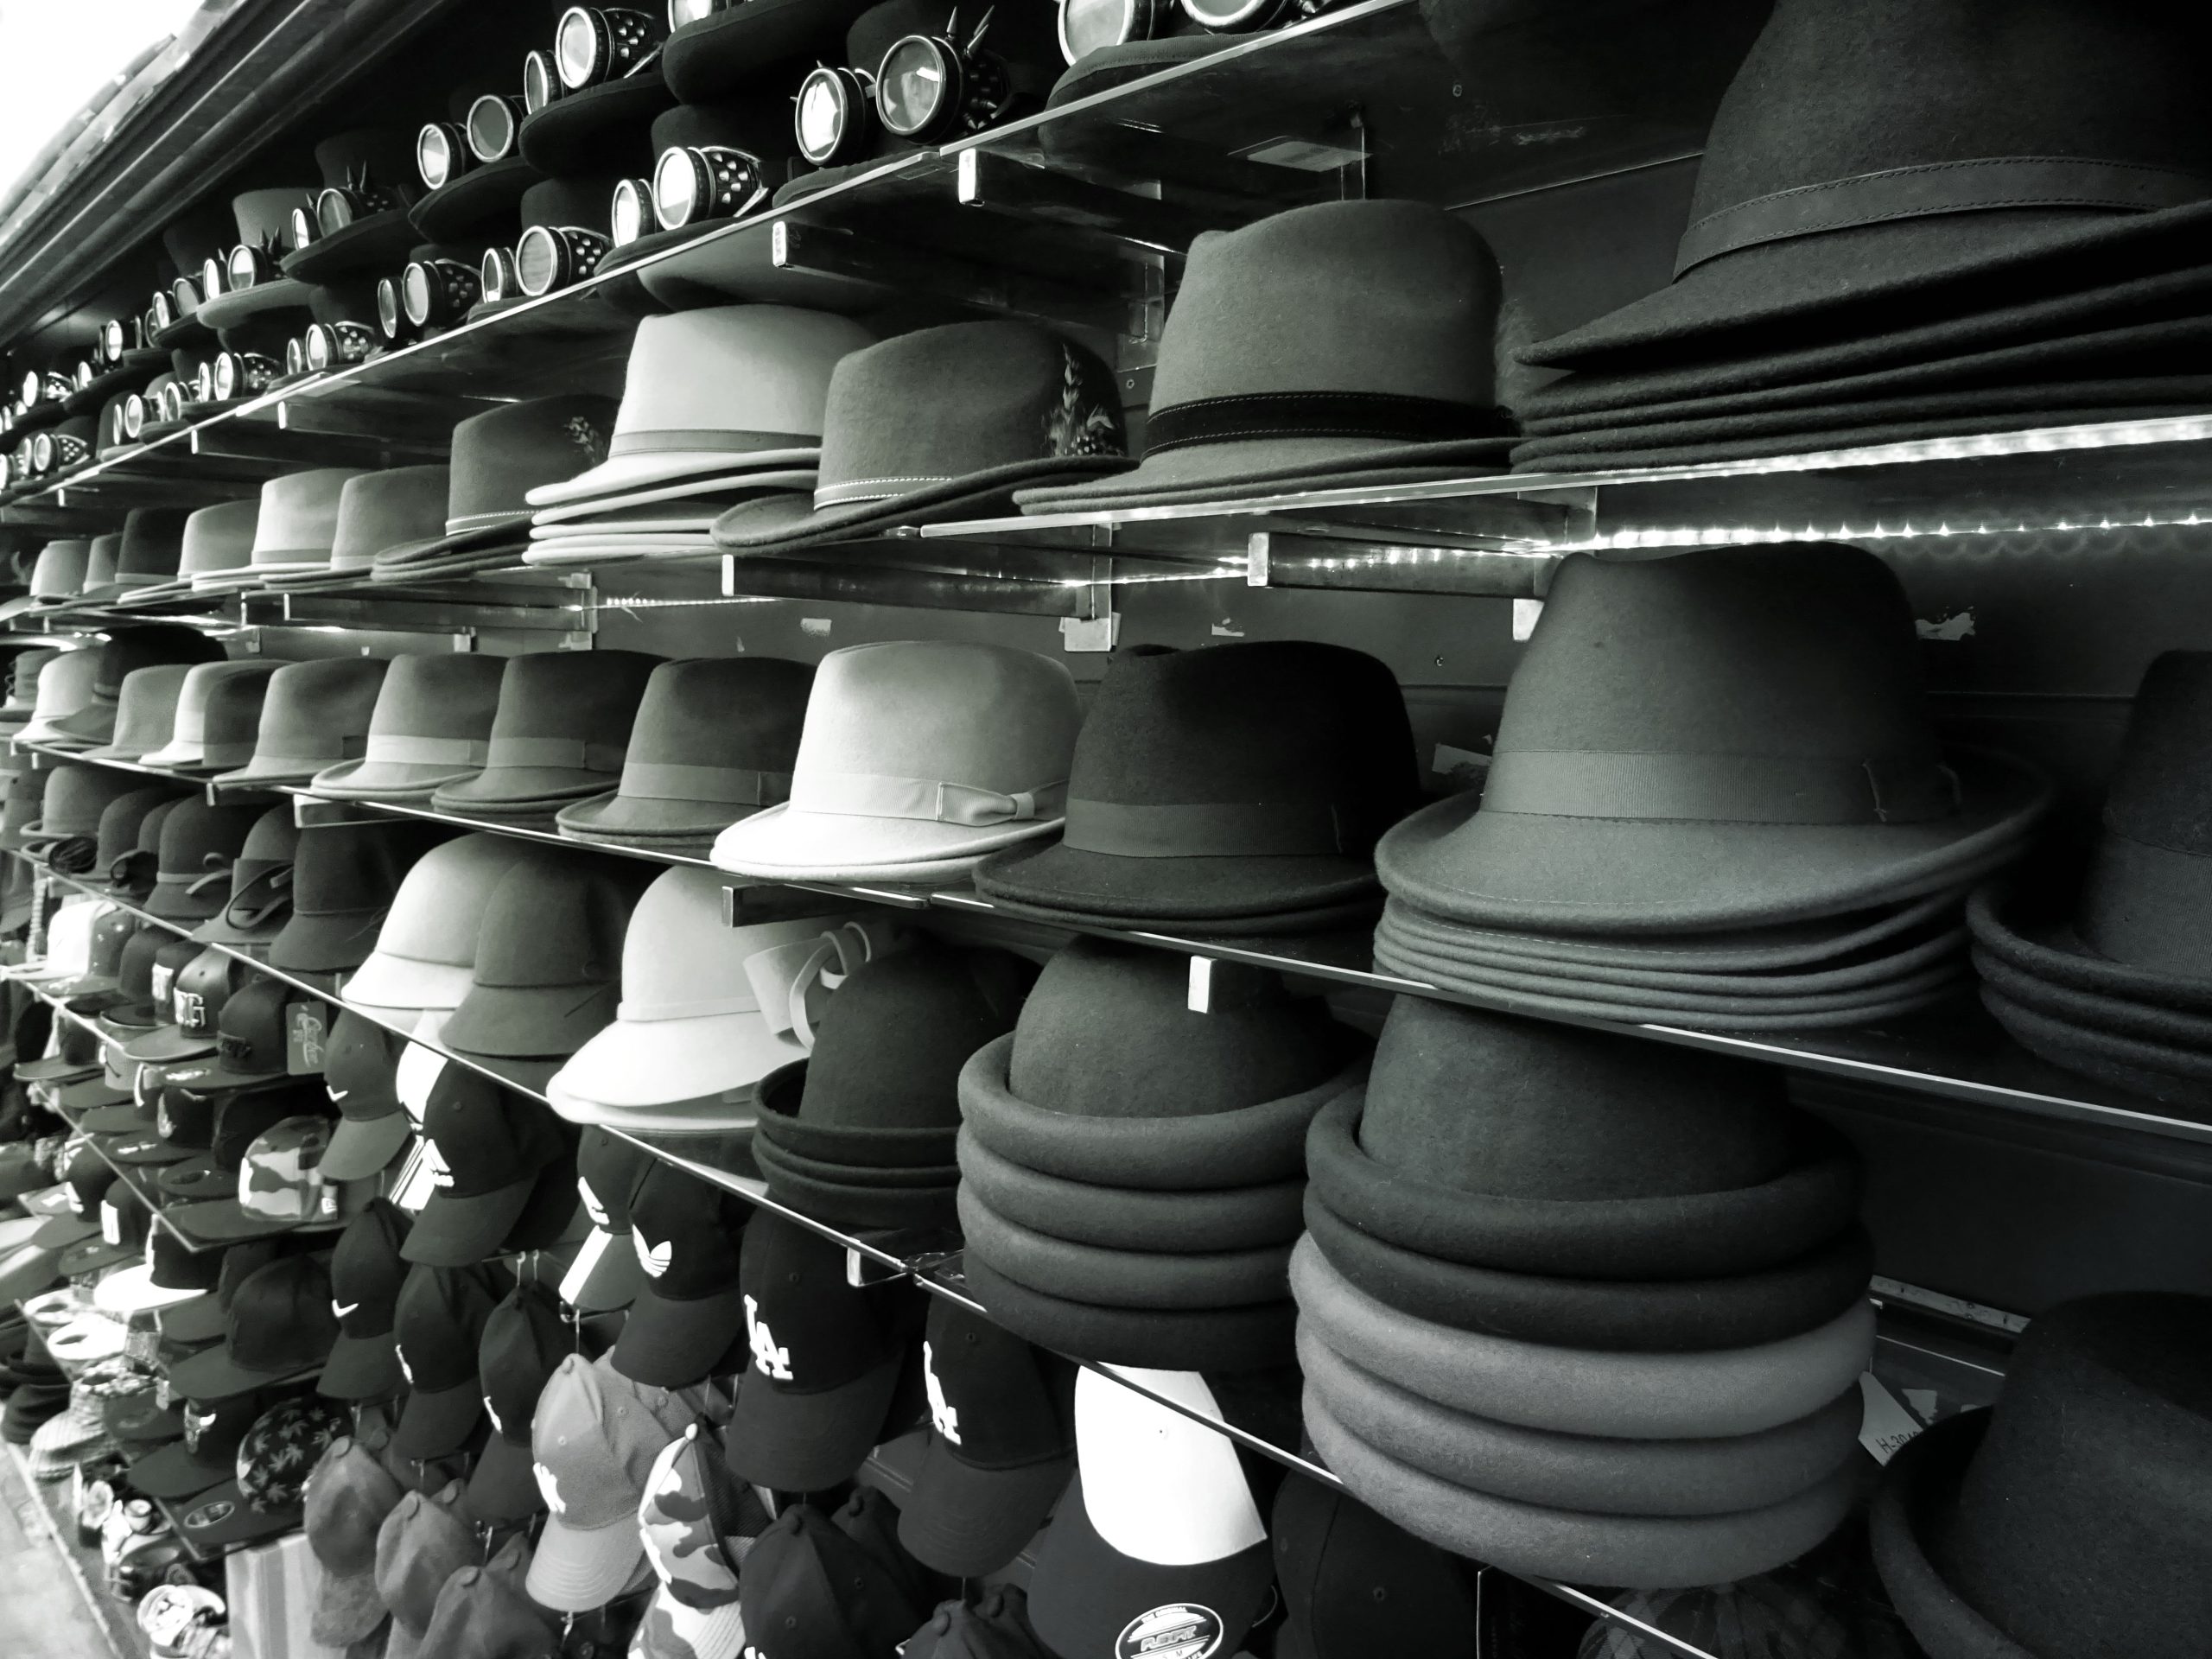 many black and white hats on a shelf